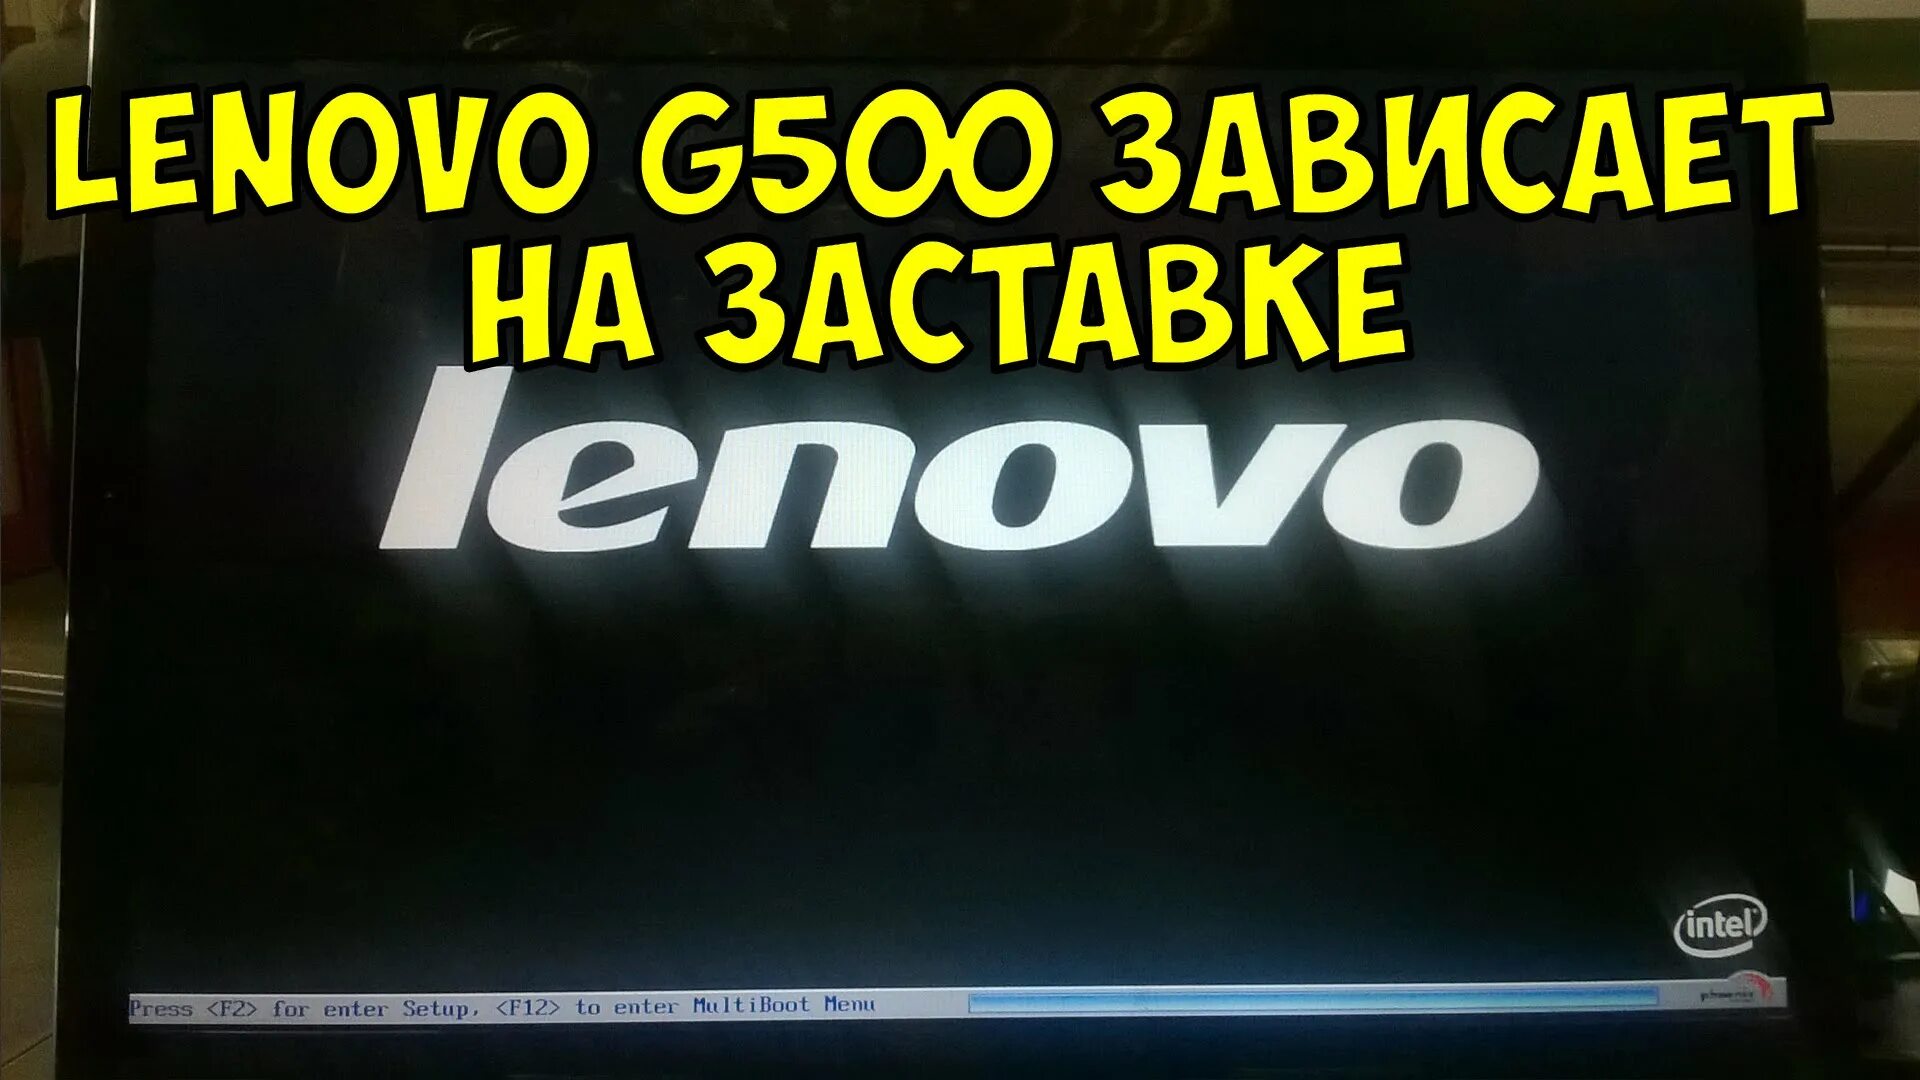 Lenovo зависает на заставке. Заставка леново при включении. Ноутбук завис на заставке. Логотип леново при включении ноутбука.